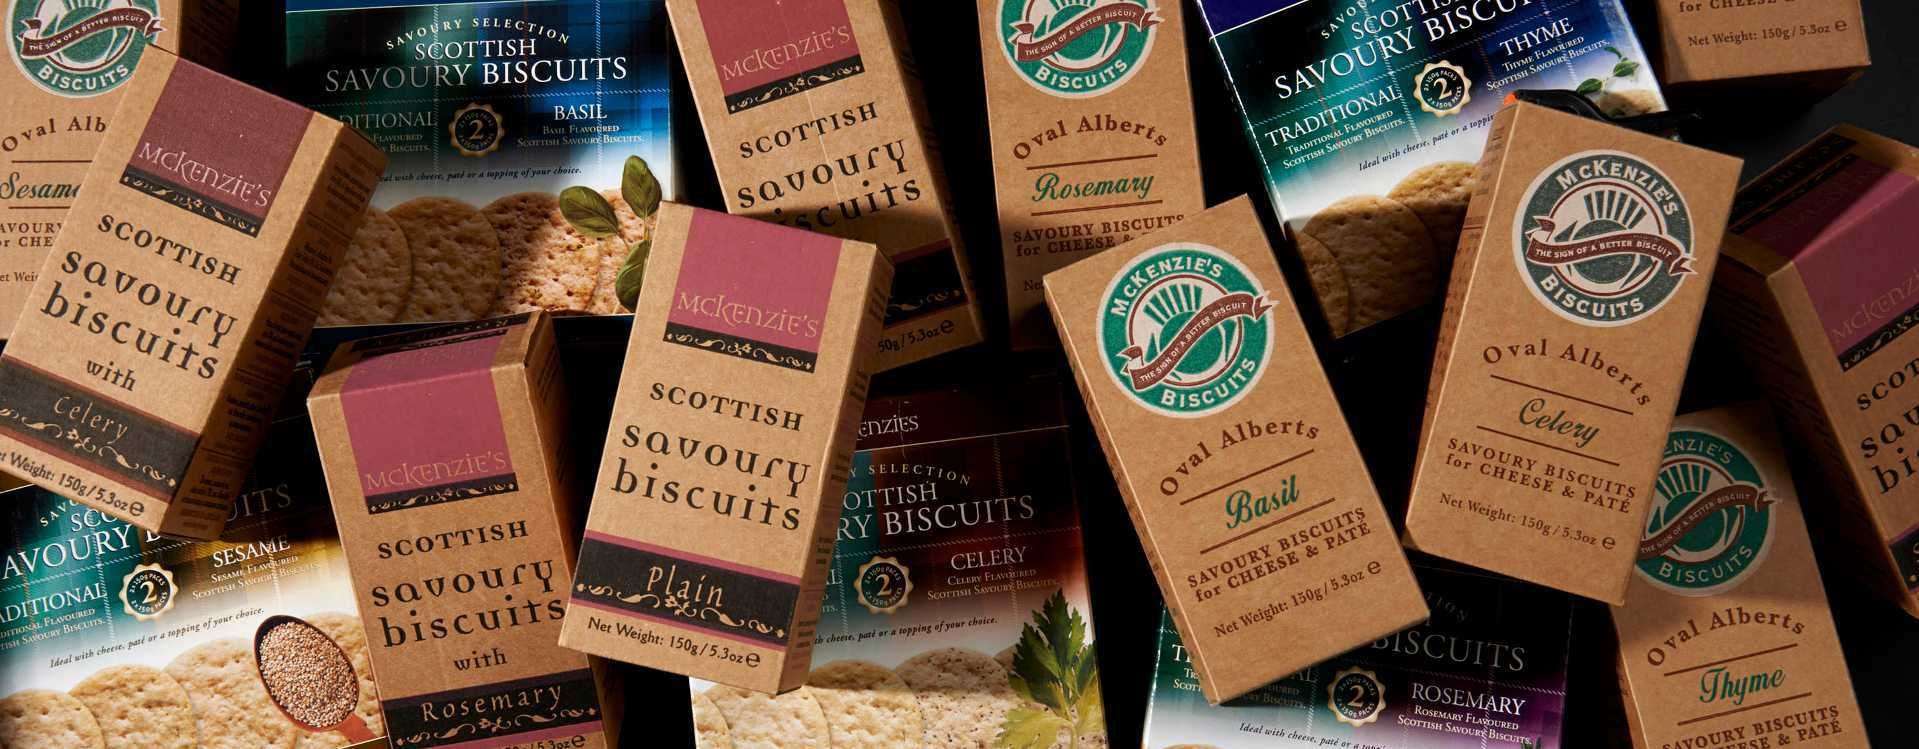 Some of McKenzie Biscuits varieties have been selected by Aldi.